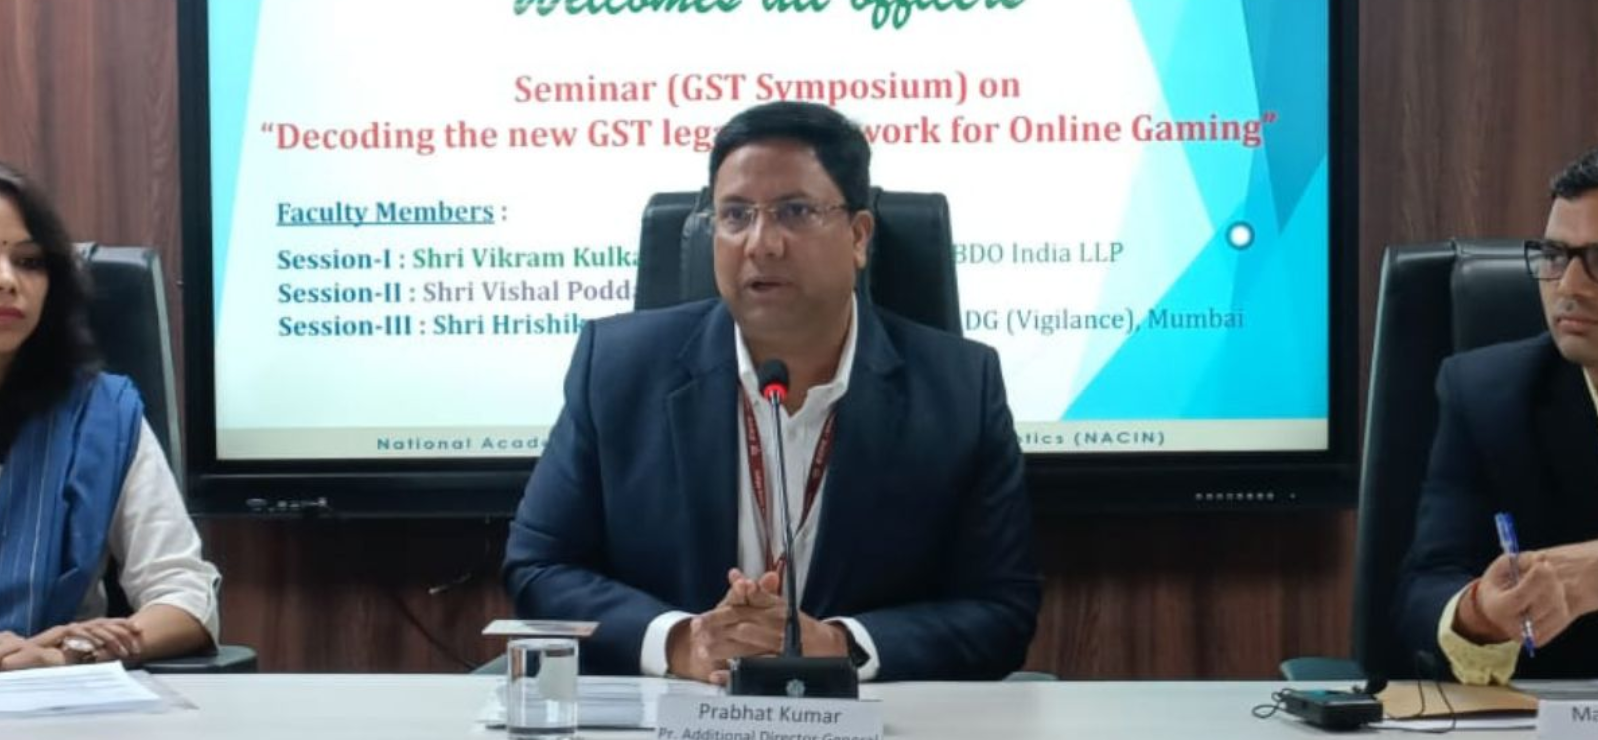 NACIN Mumbai hosts GST symposium on online gaming legal framework